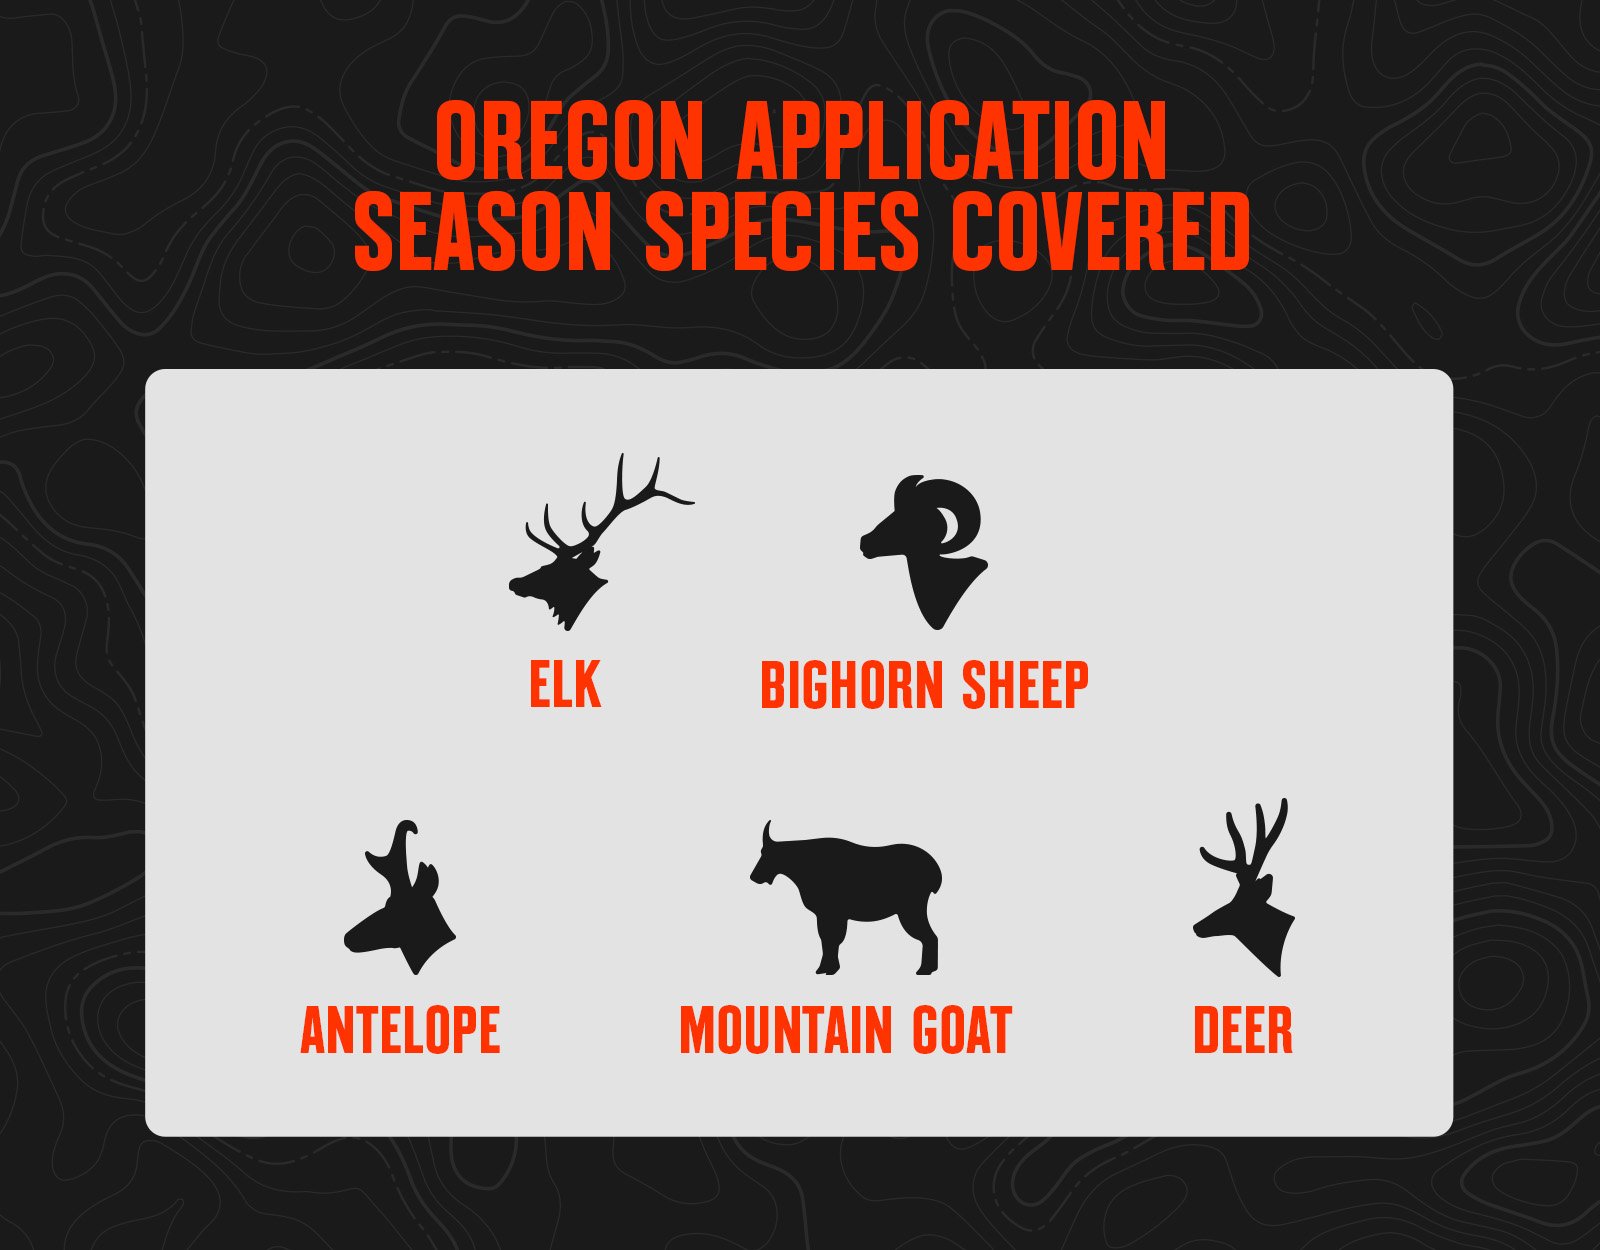 Infographic showing Oregon application season species. 